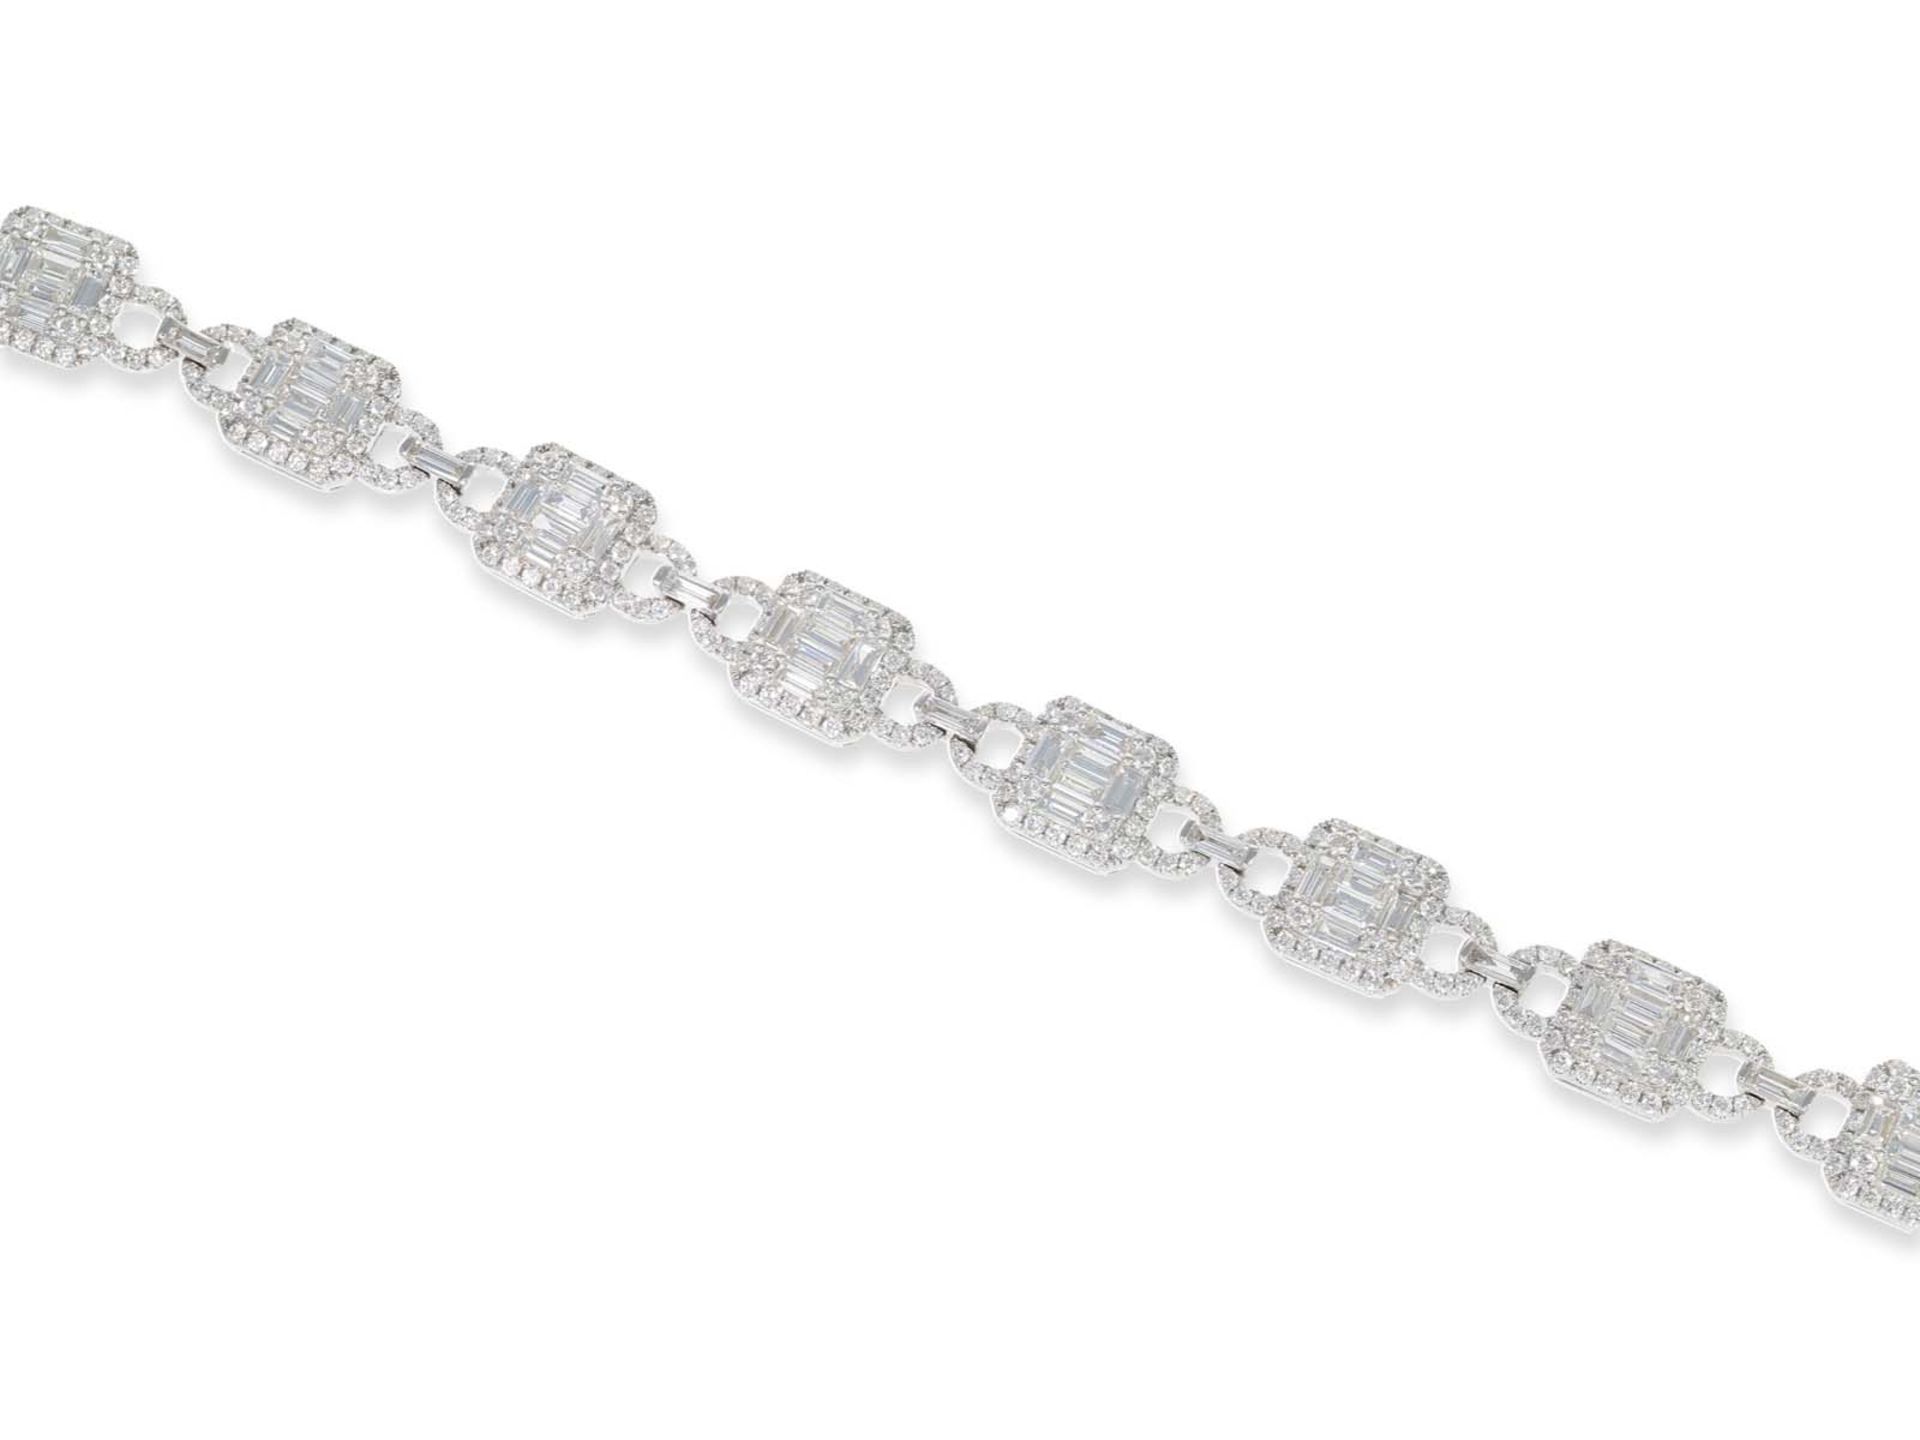 Bracelet: highly decorative precious diamond bracelet, total approx. 5.18ct,18K gold, mint condition - Image 2 of 3